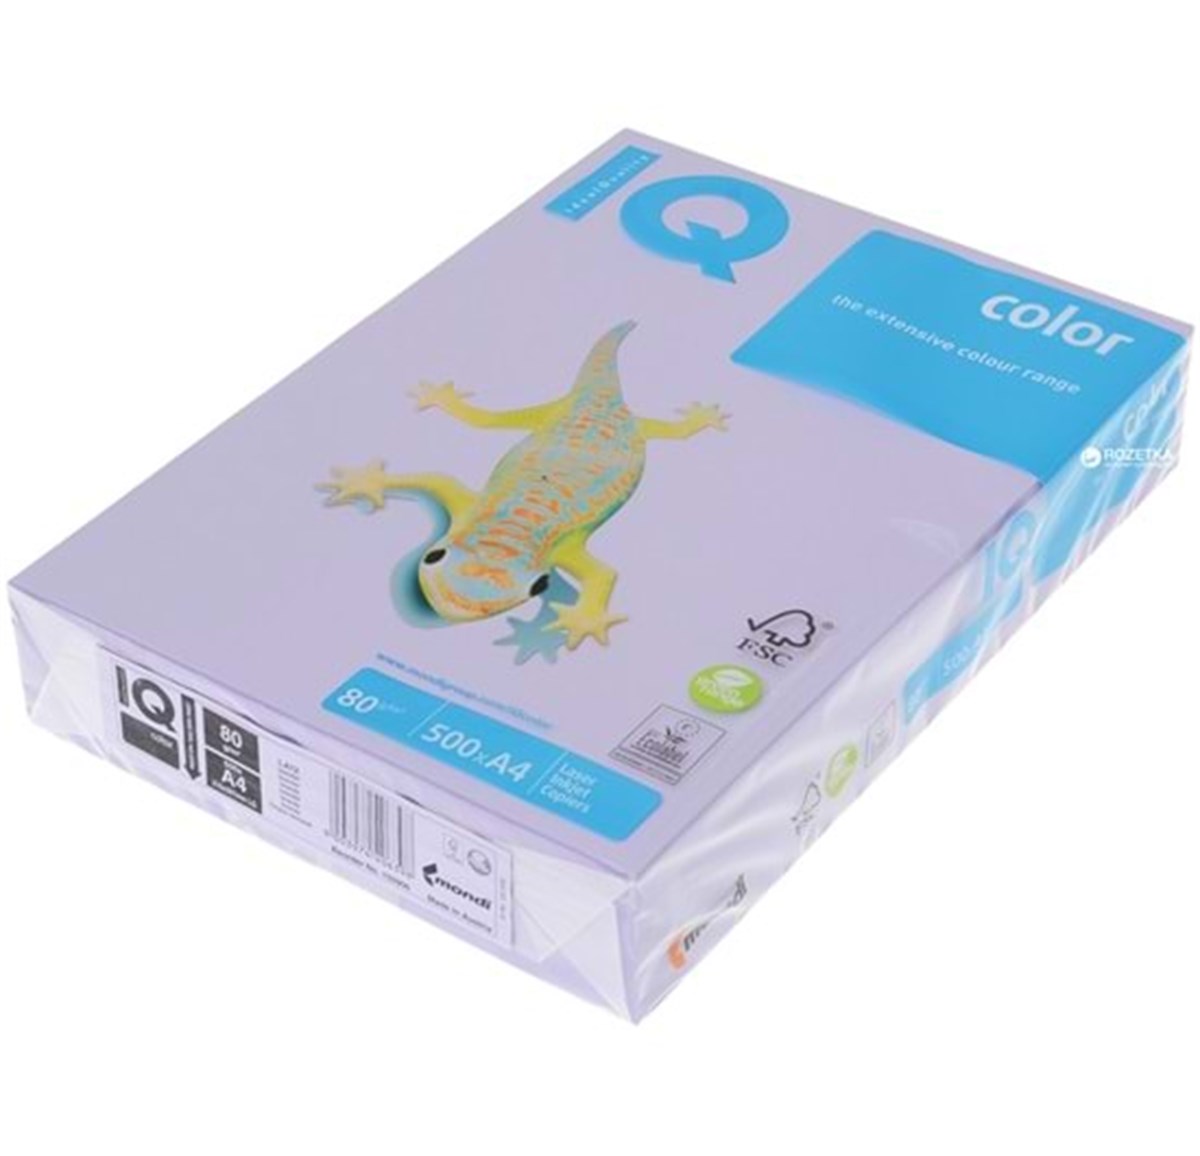 Mondi IQ A4 80 gr. Renkli Fotokopi Kağıdı 500'lü Paket Lavanta